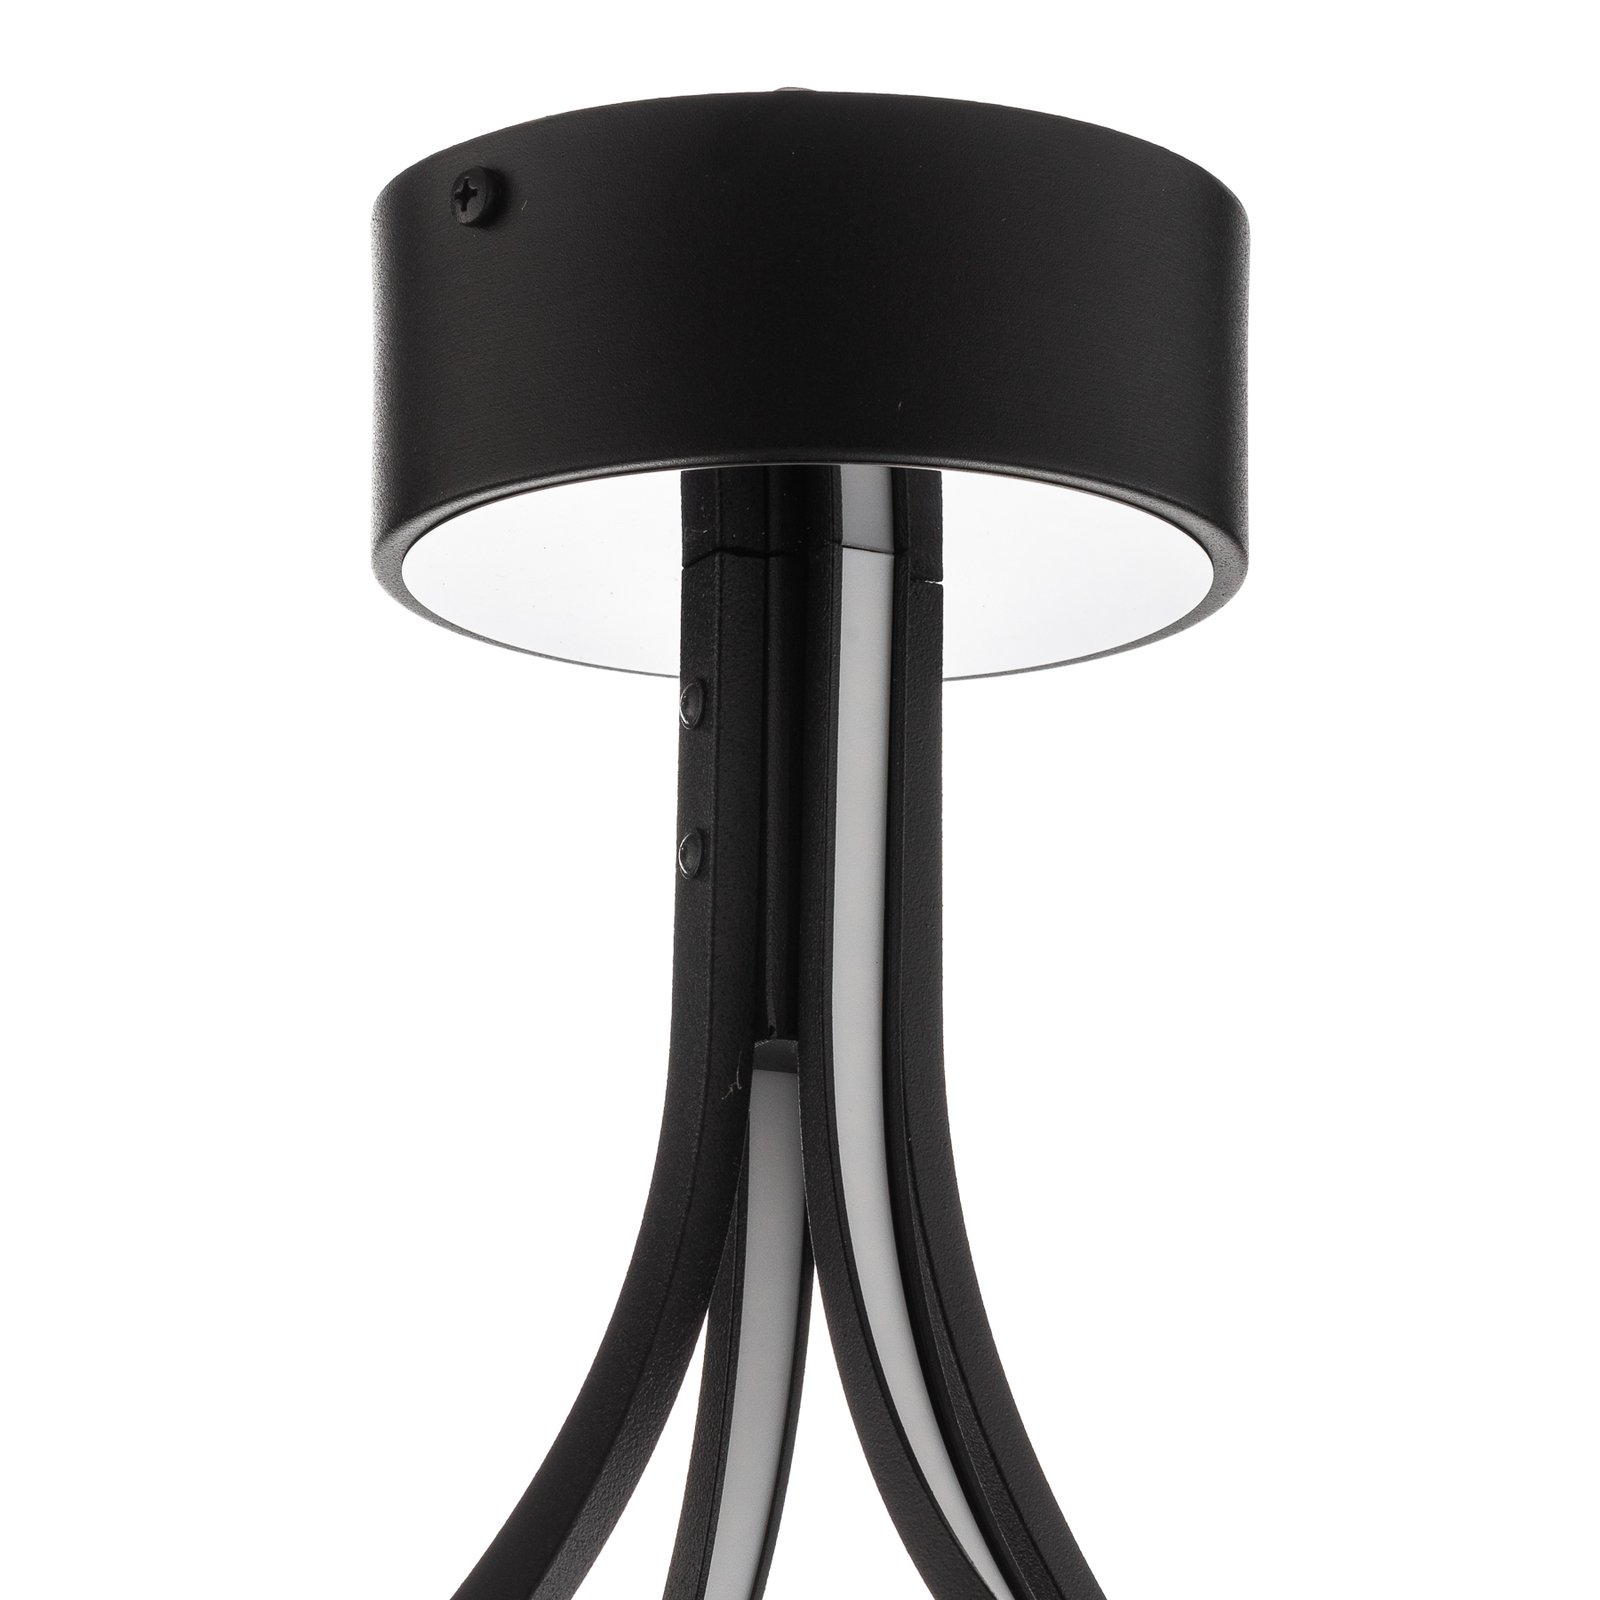 LED ceiling lamp Lungo black, 42 cm high